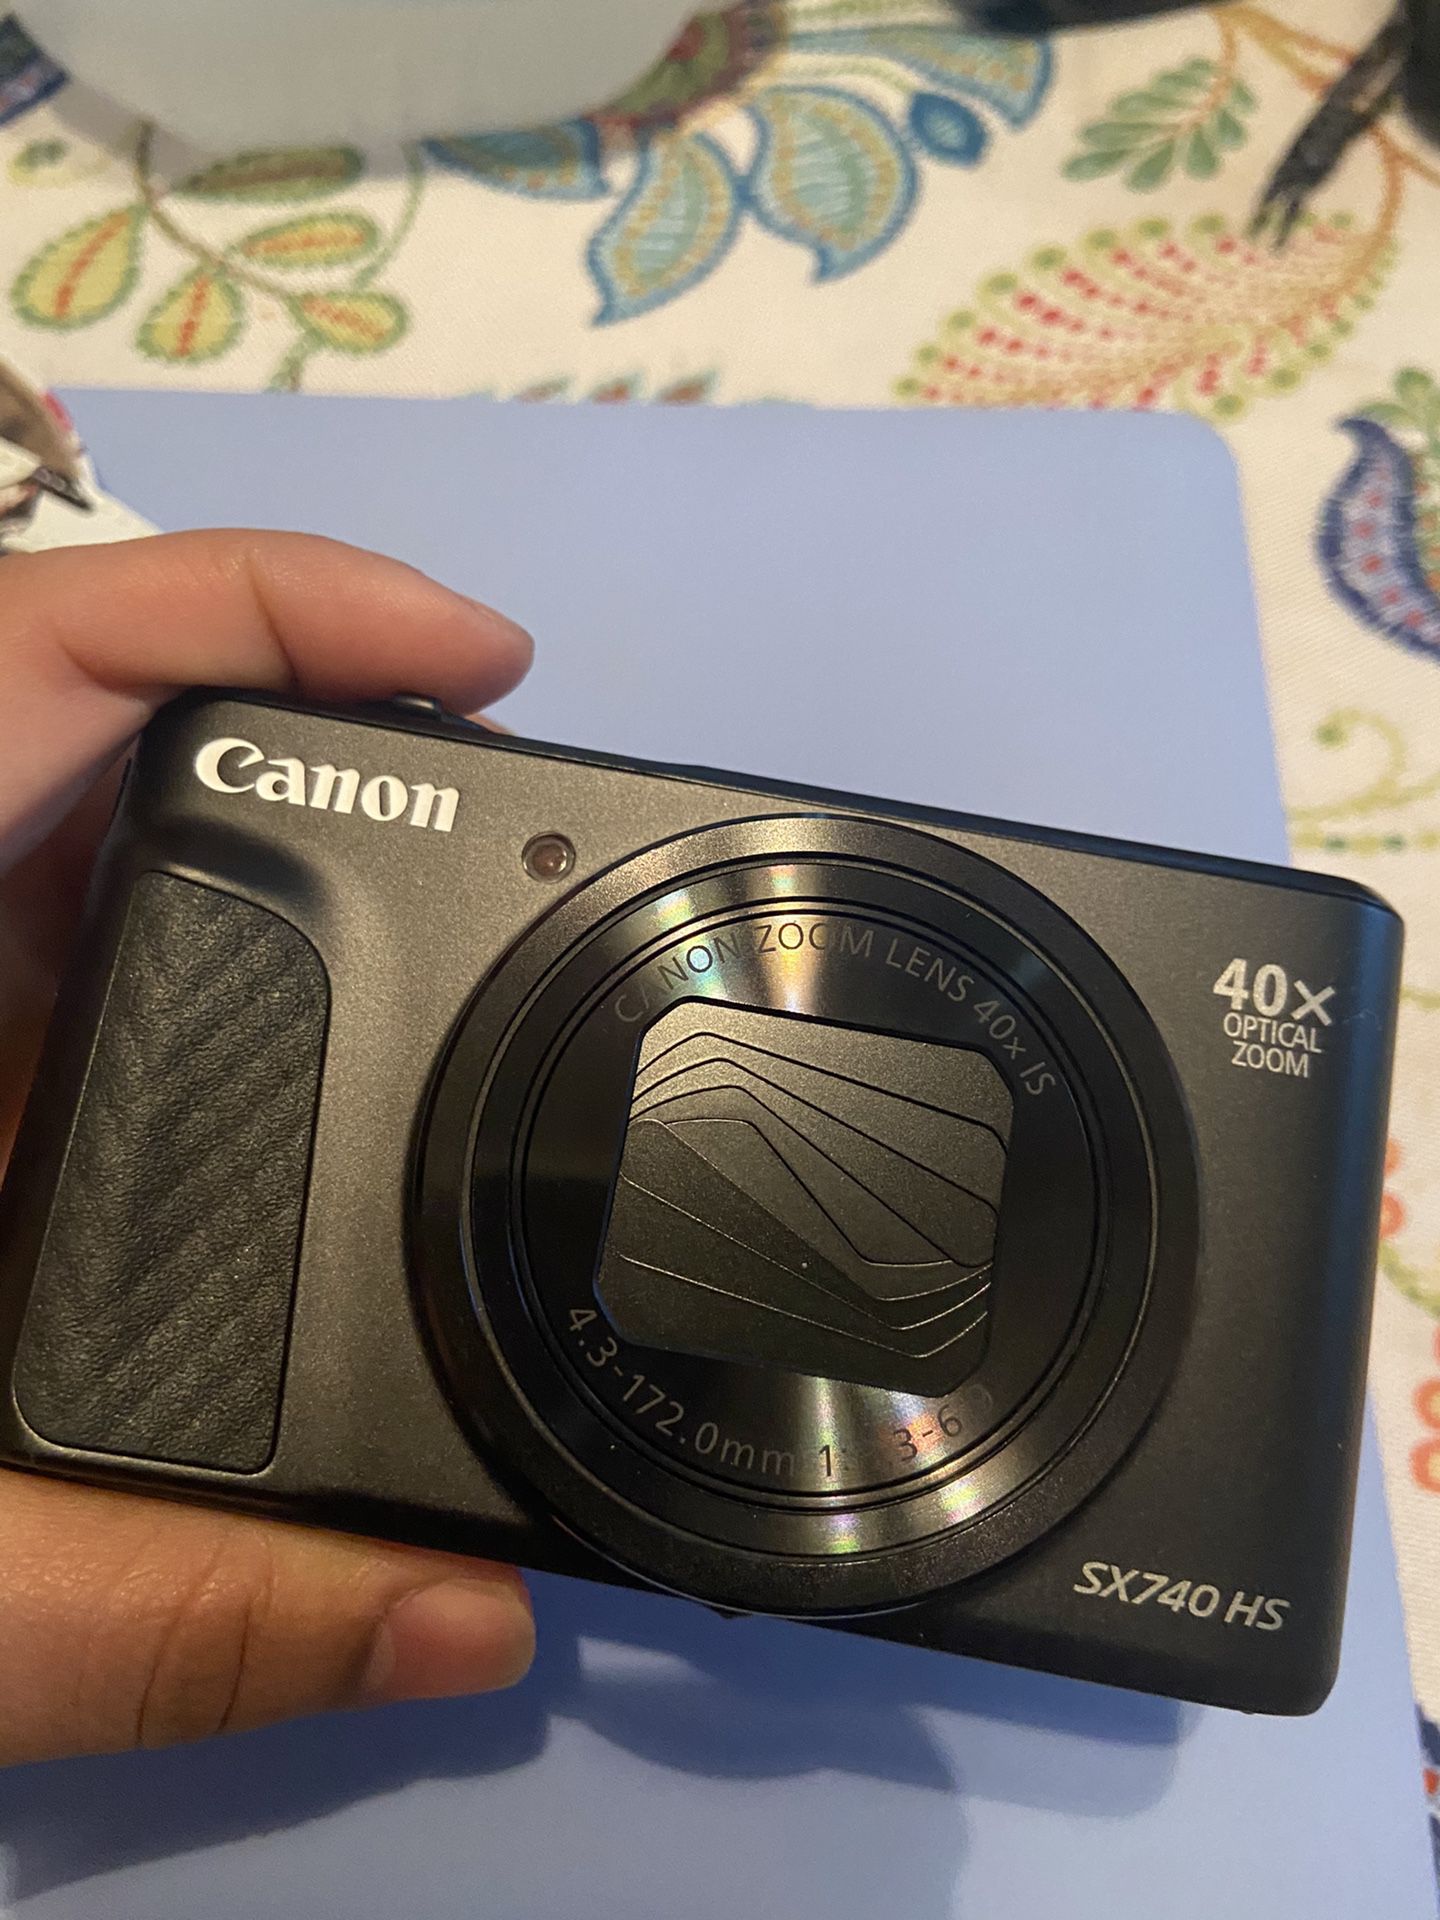 Canon 40x optical zoom digital camera.